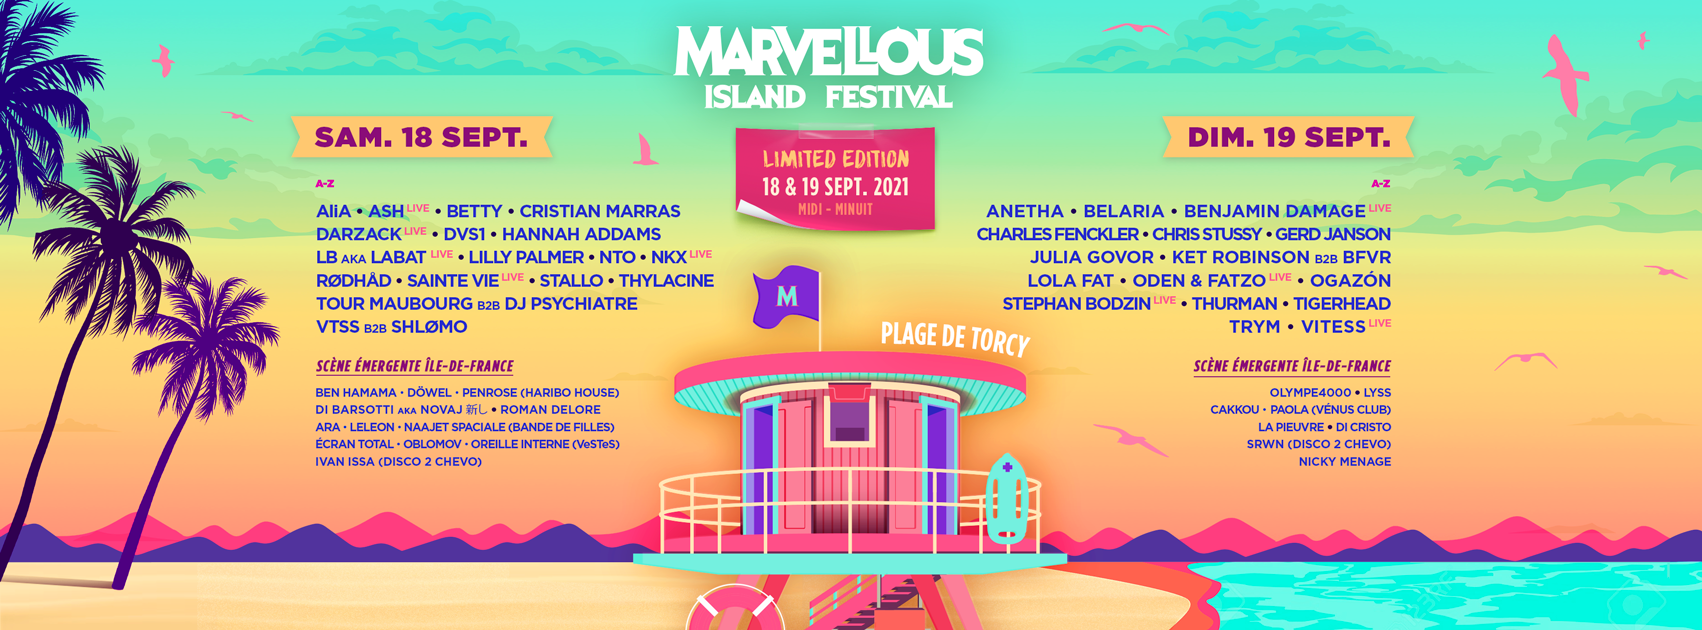 MARVELLOUS ISLAND FESTIVAL 2021 : LIMITED EDITION